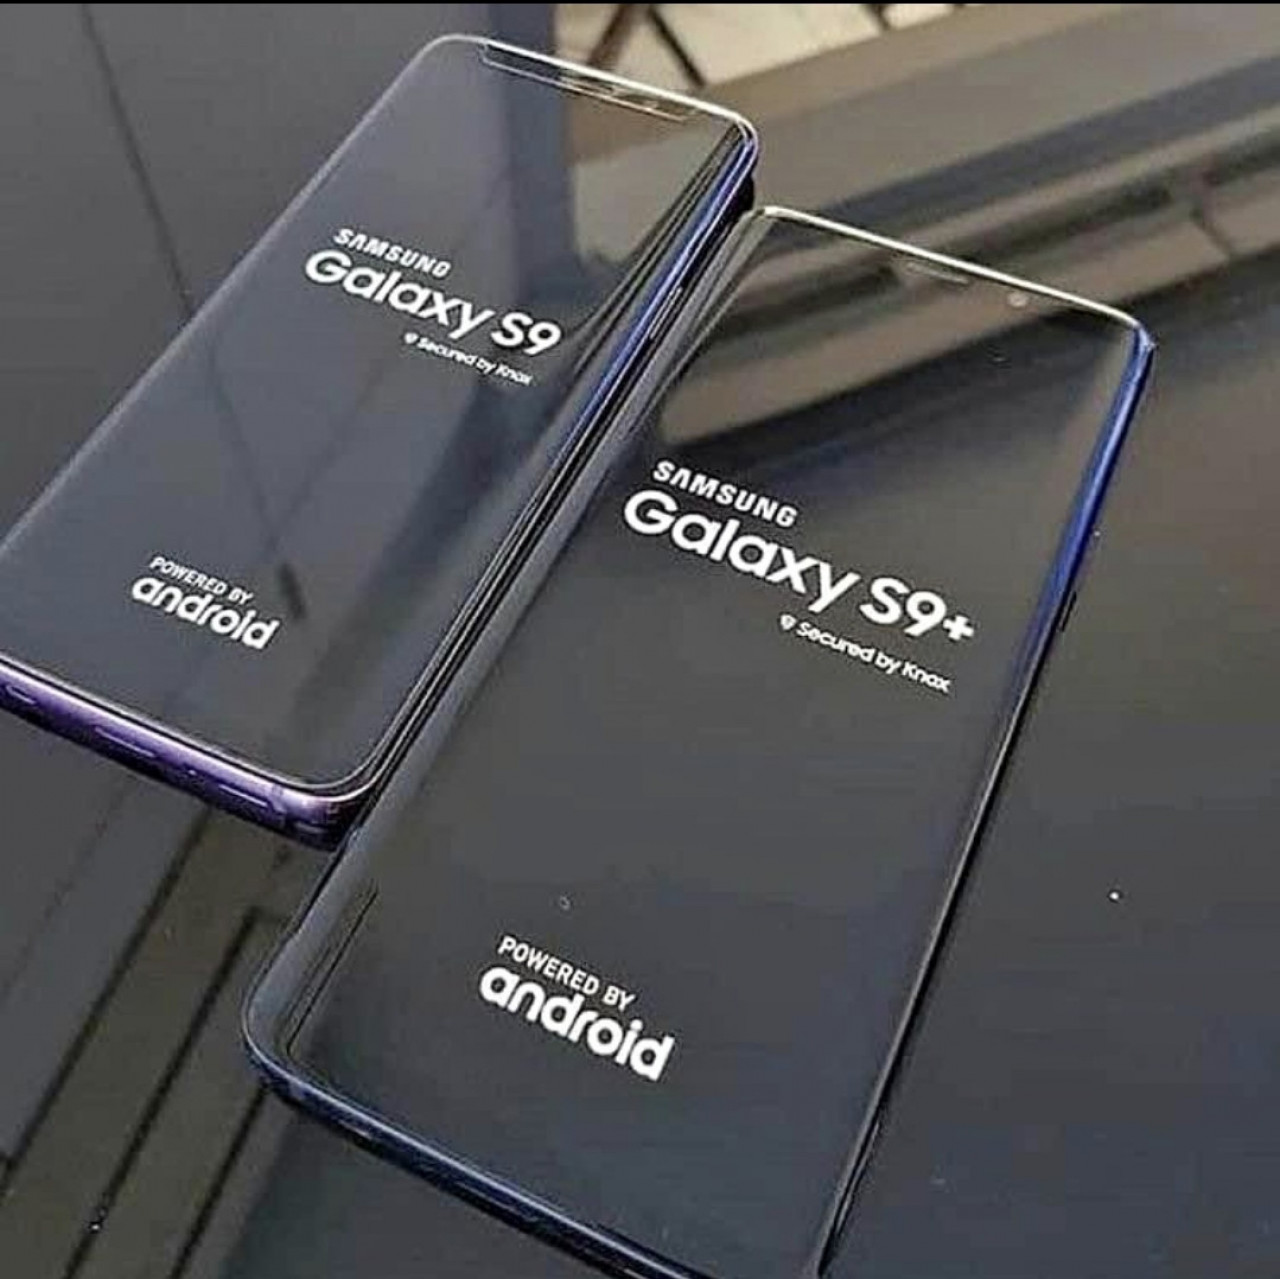 Samsung Galaxy S9+, Téléphones Mobiles, Conakry